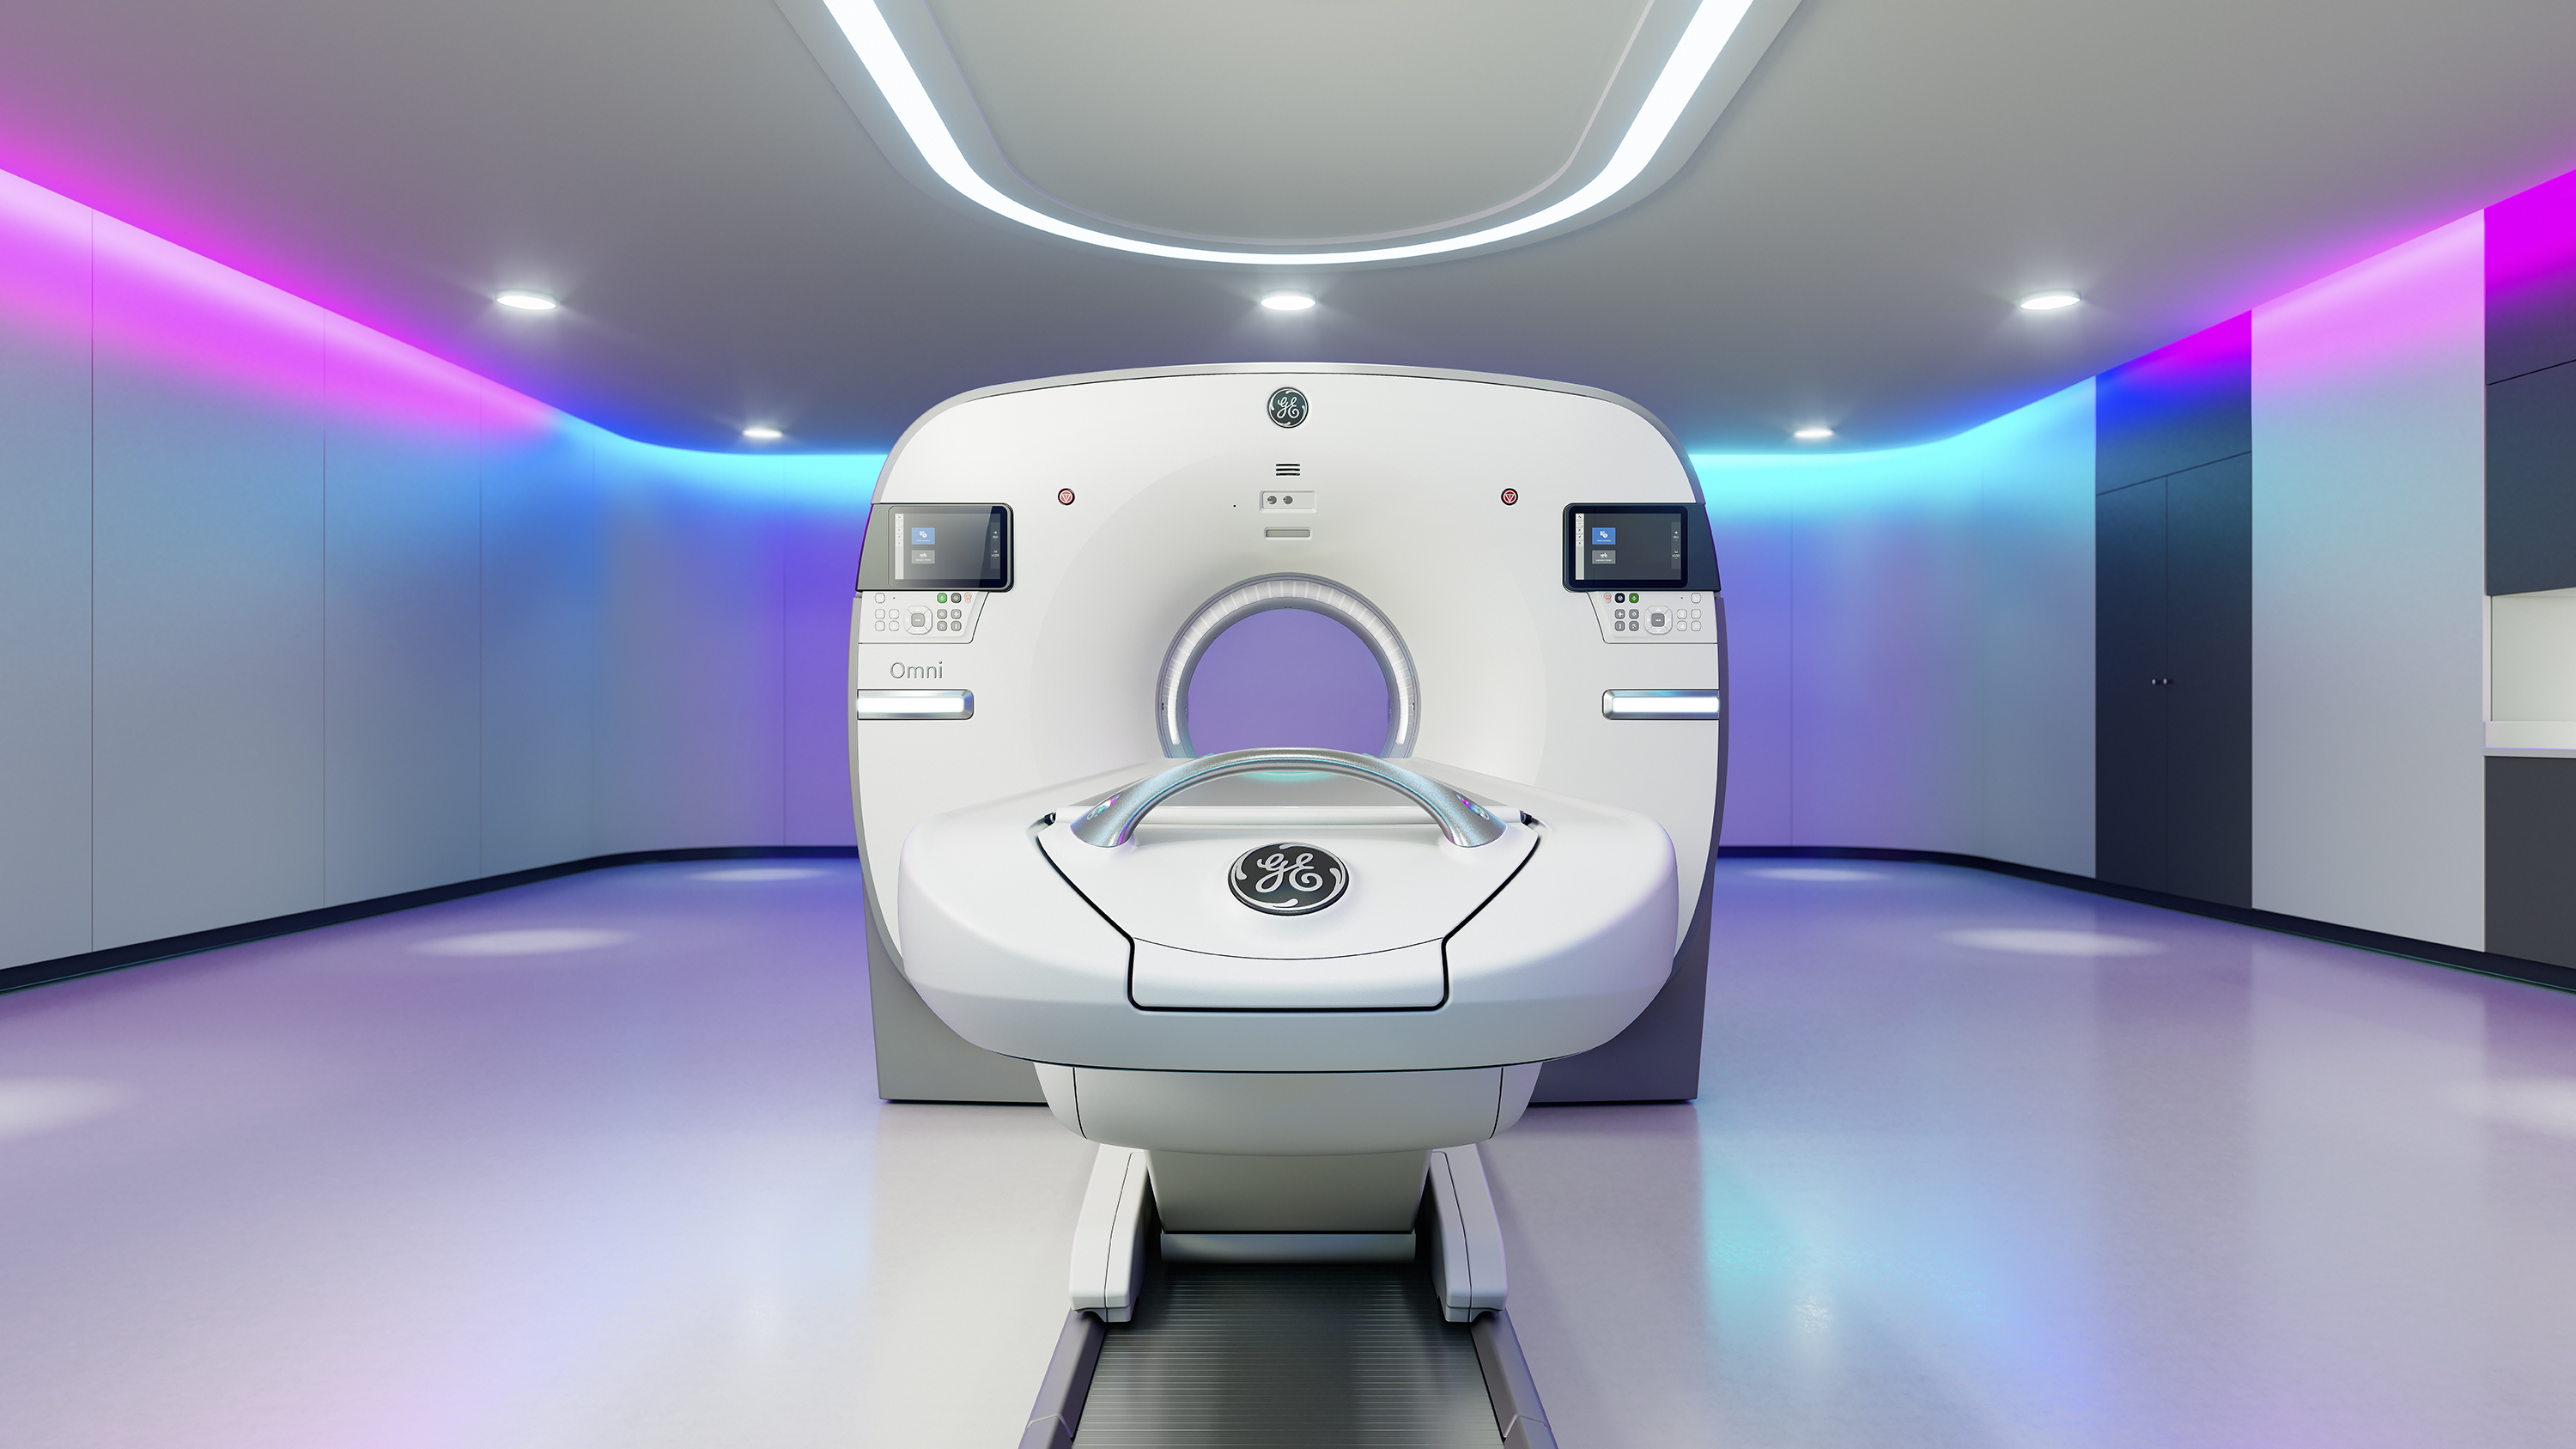 PET-CT  Imaging Technology News